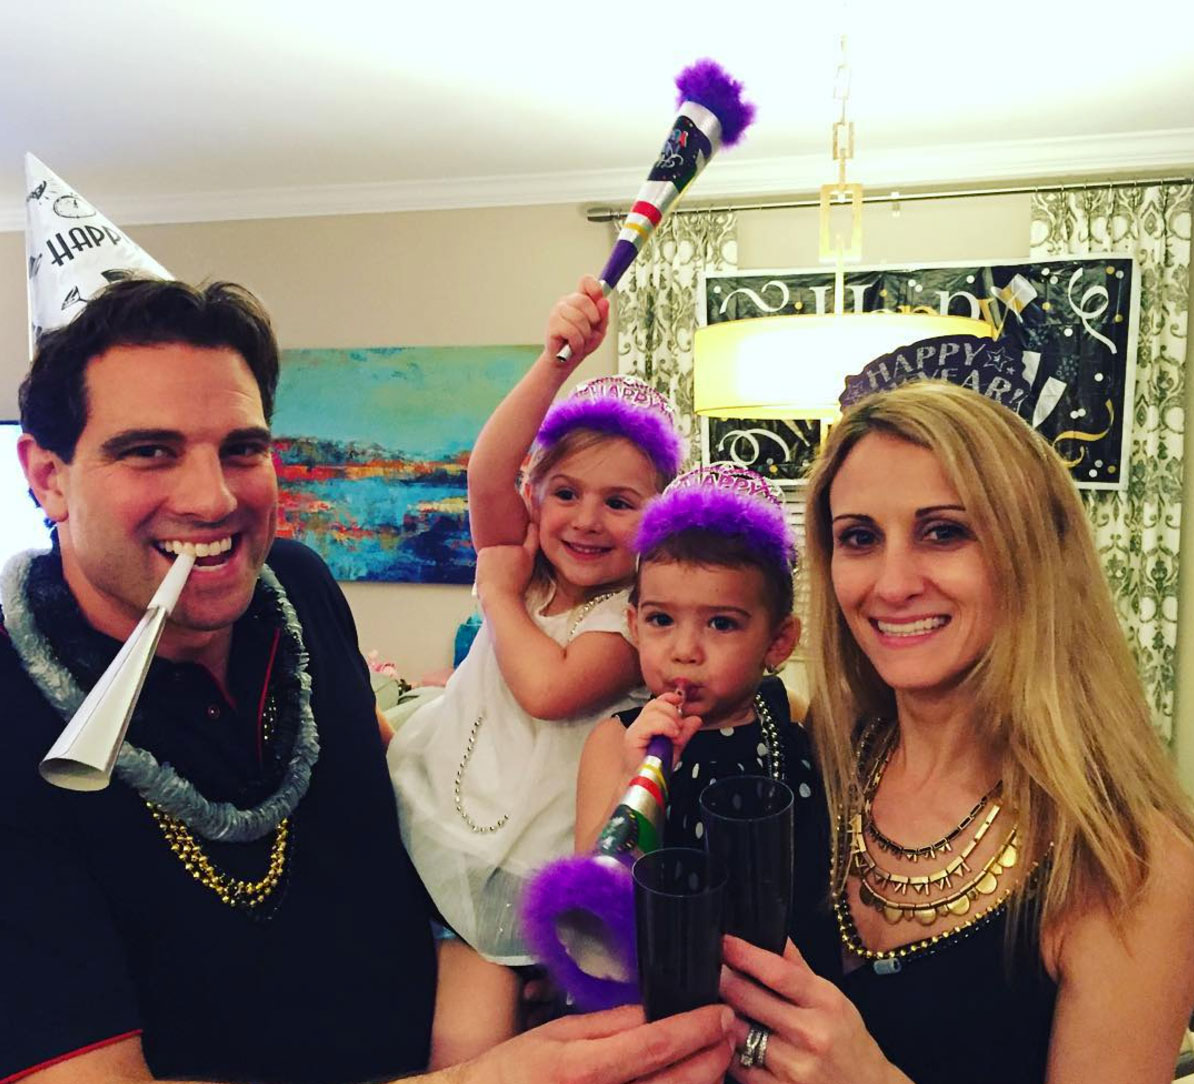 The McGillivray family celebrating new year's eve